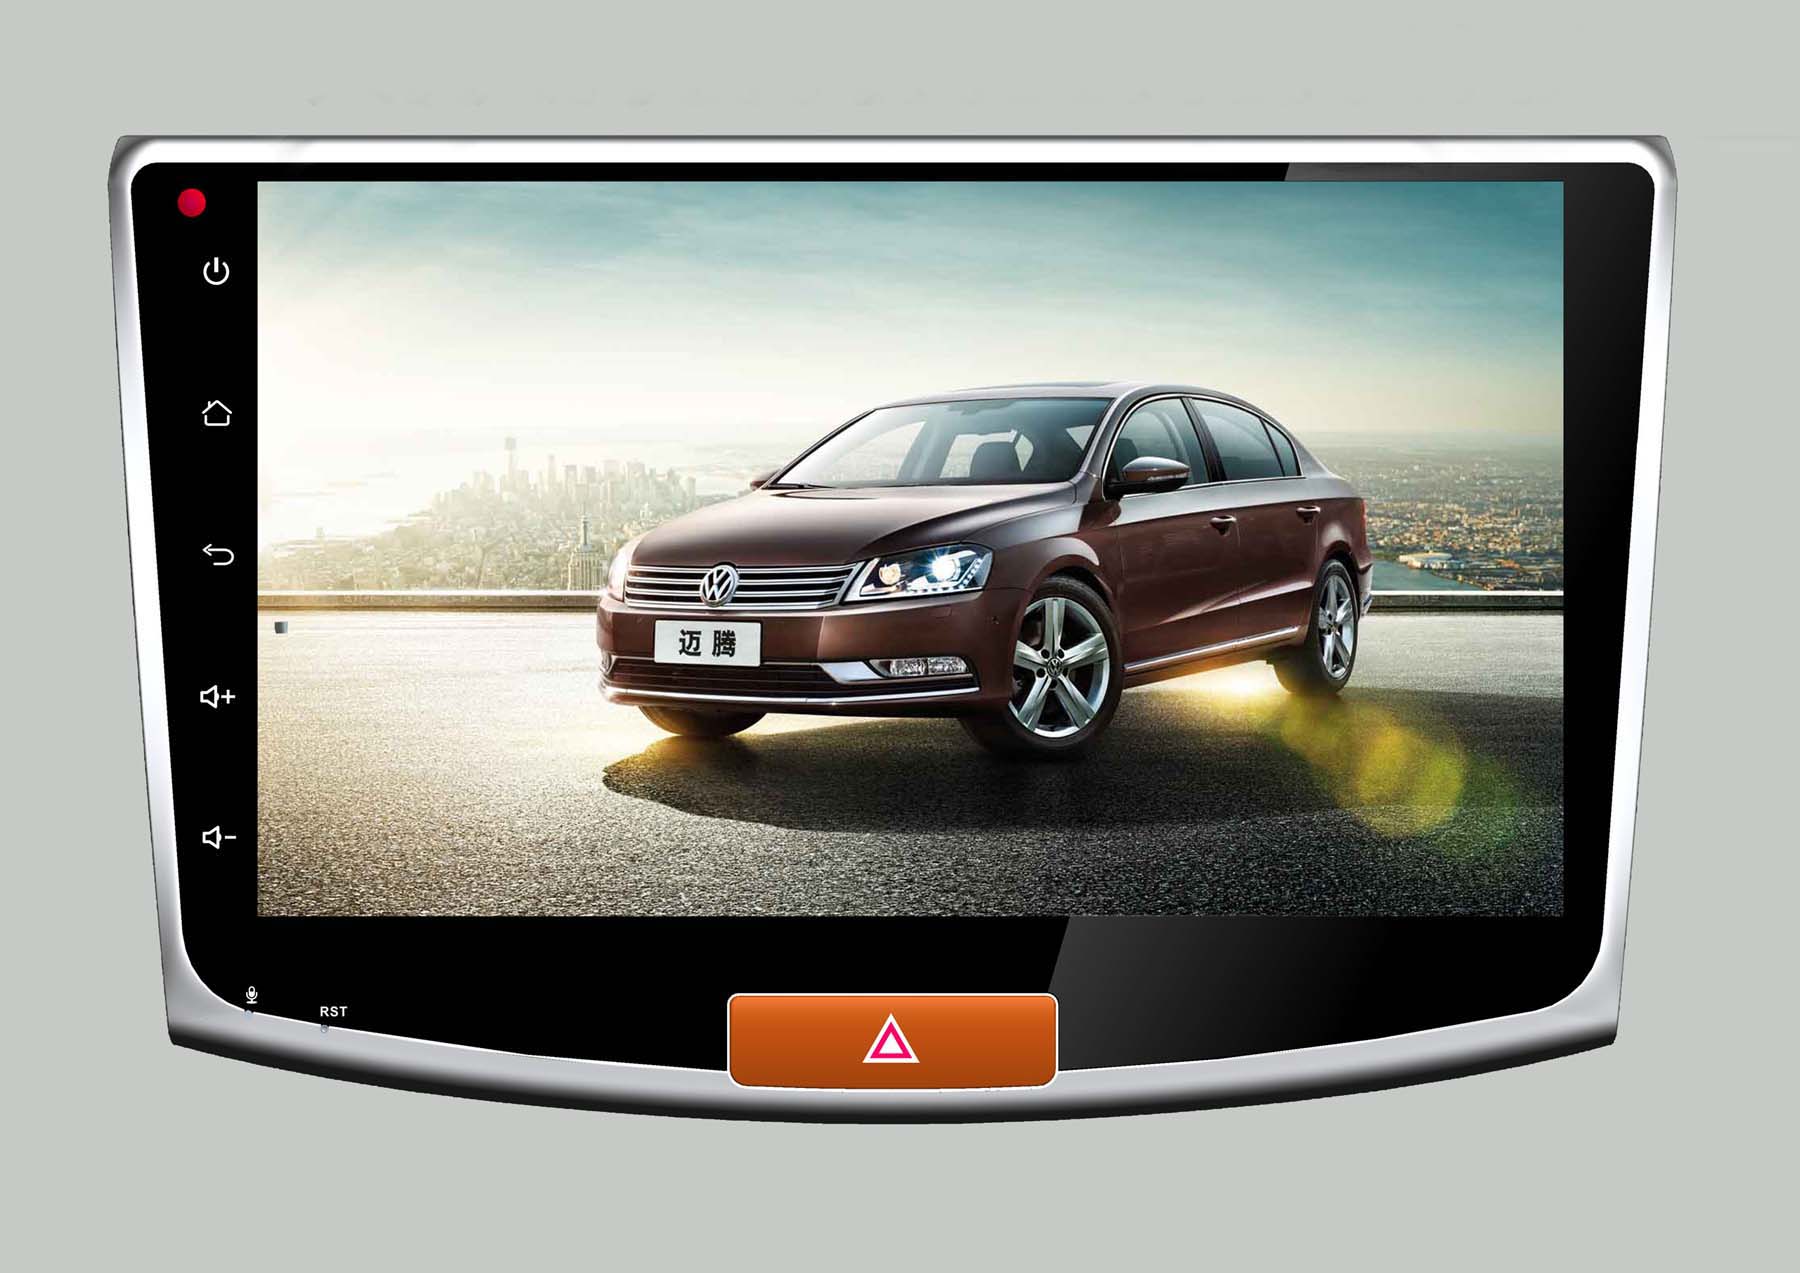 VW MAGOTAN 2013 10.1'' HD Touch Screen Car PC Android 7.1/6.0 FM AM Radio Auto GPS navi BT Wifi Mirror link Quad/Eight Cores Car Stereo players Head unit